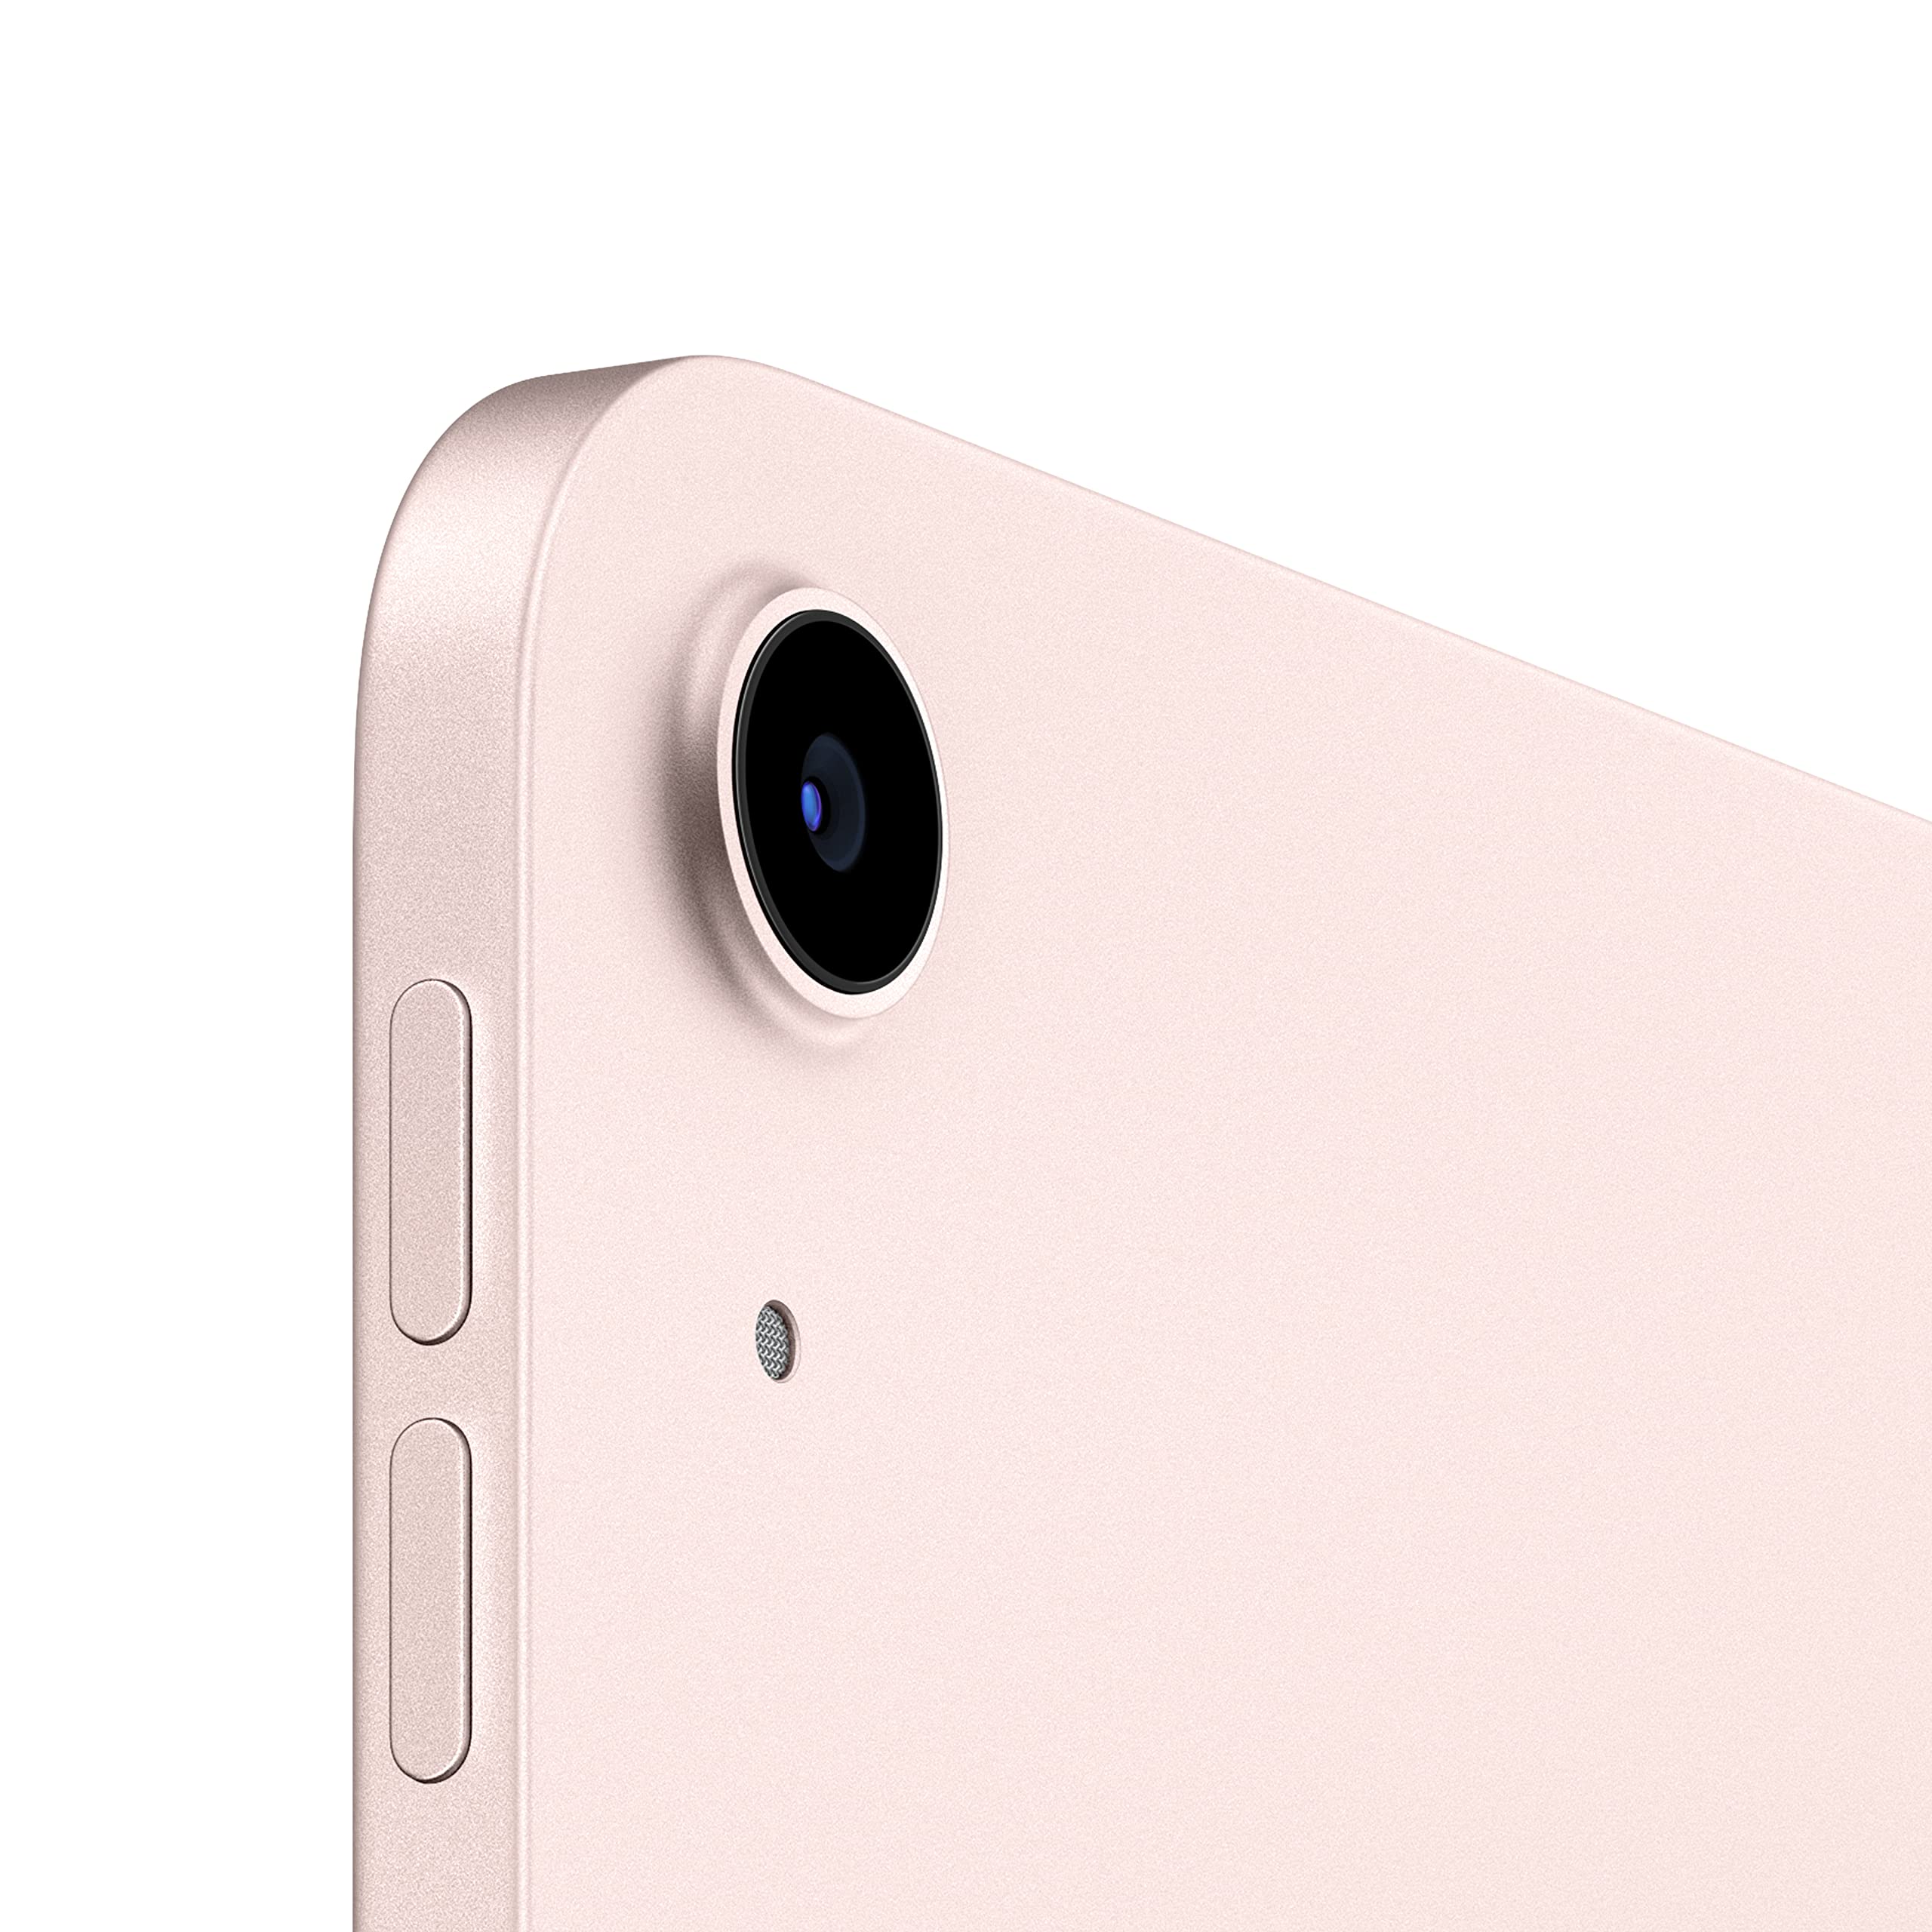 2022 Apple 10.9-inch iPad Air (Wi-Fi, 256GB) - Pink (5th Generation)